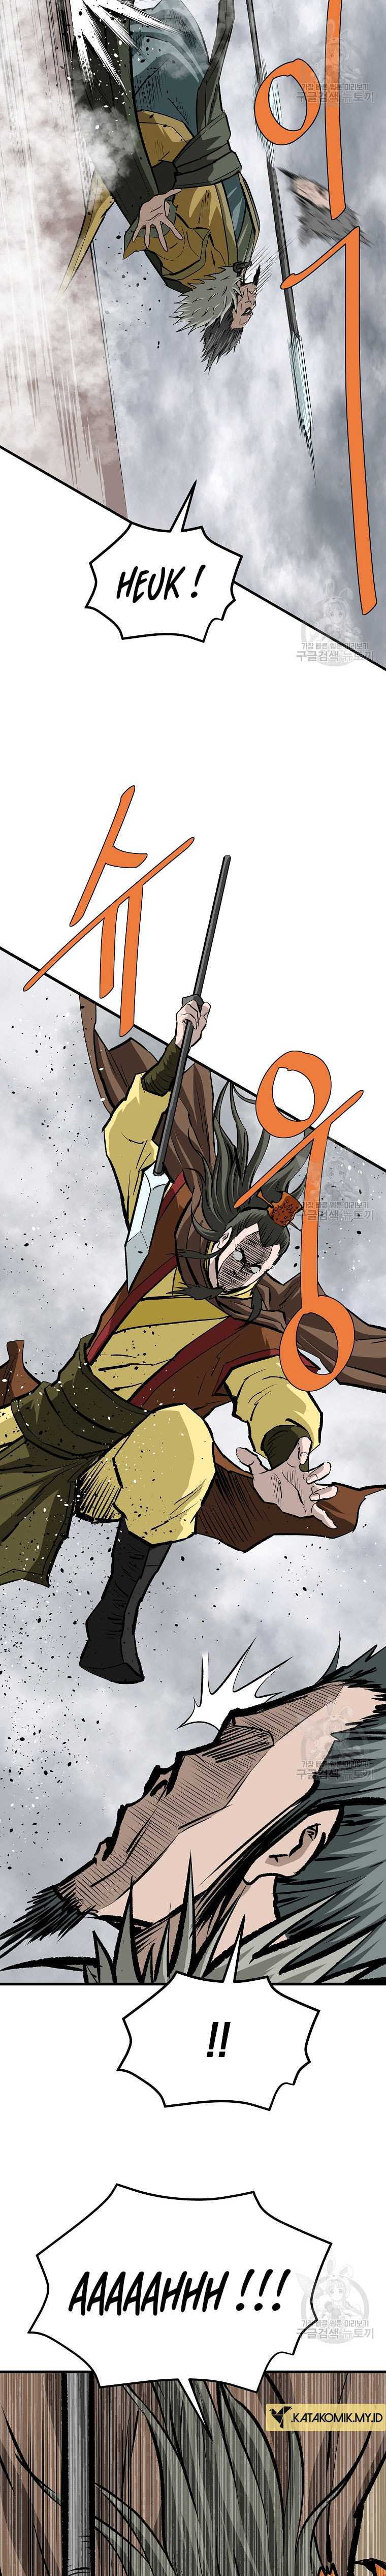 Archer Sword God : Descendants of the Archer Chapter 80